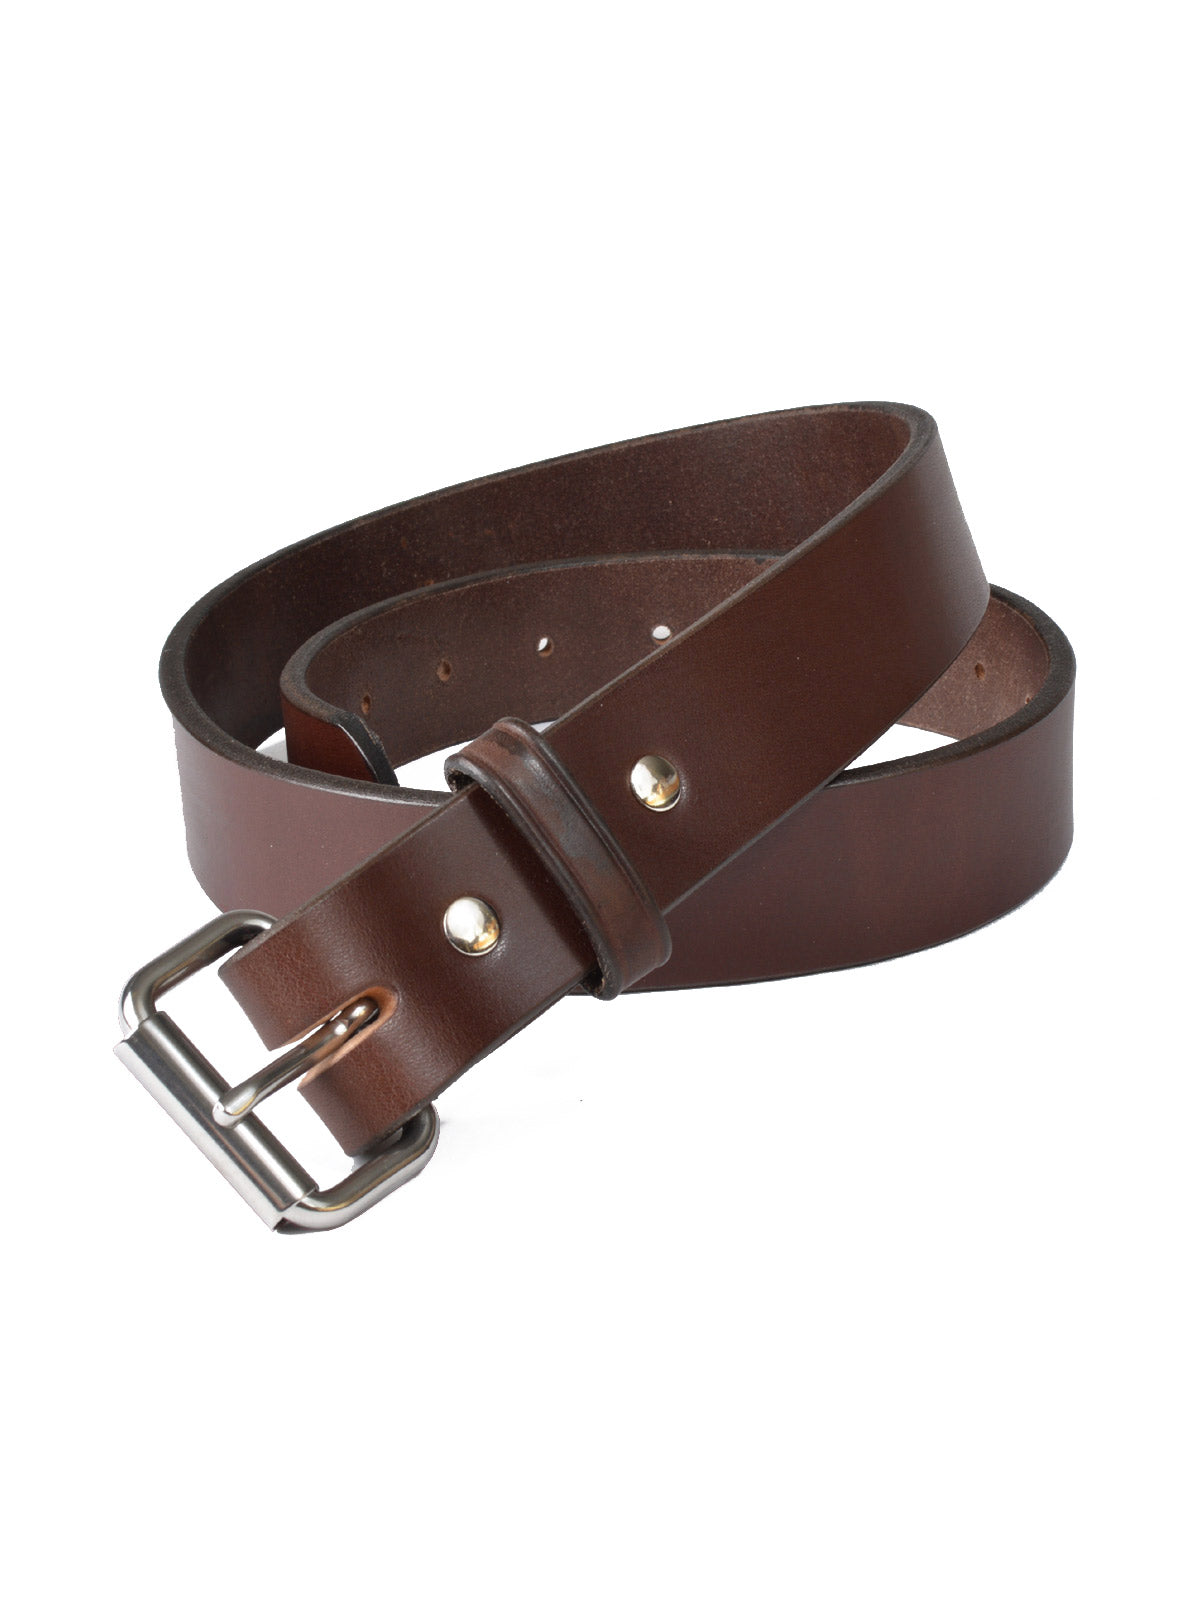 P&B Harness Full Grain Leather Belts in Brown 310-B-BRN - Big Man Sizes